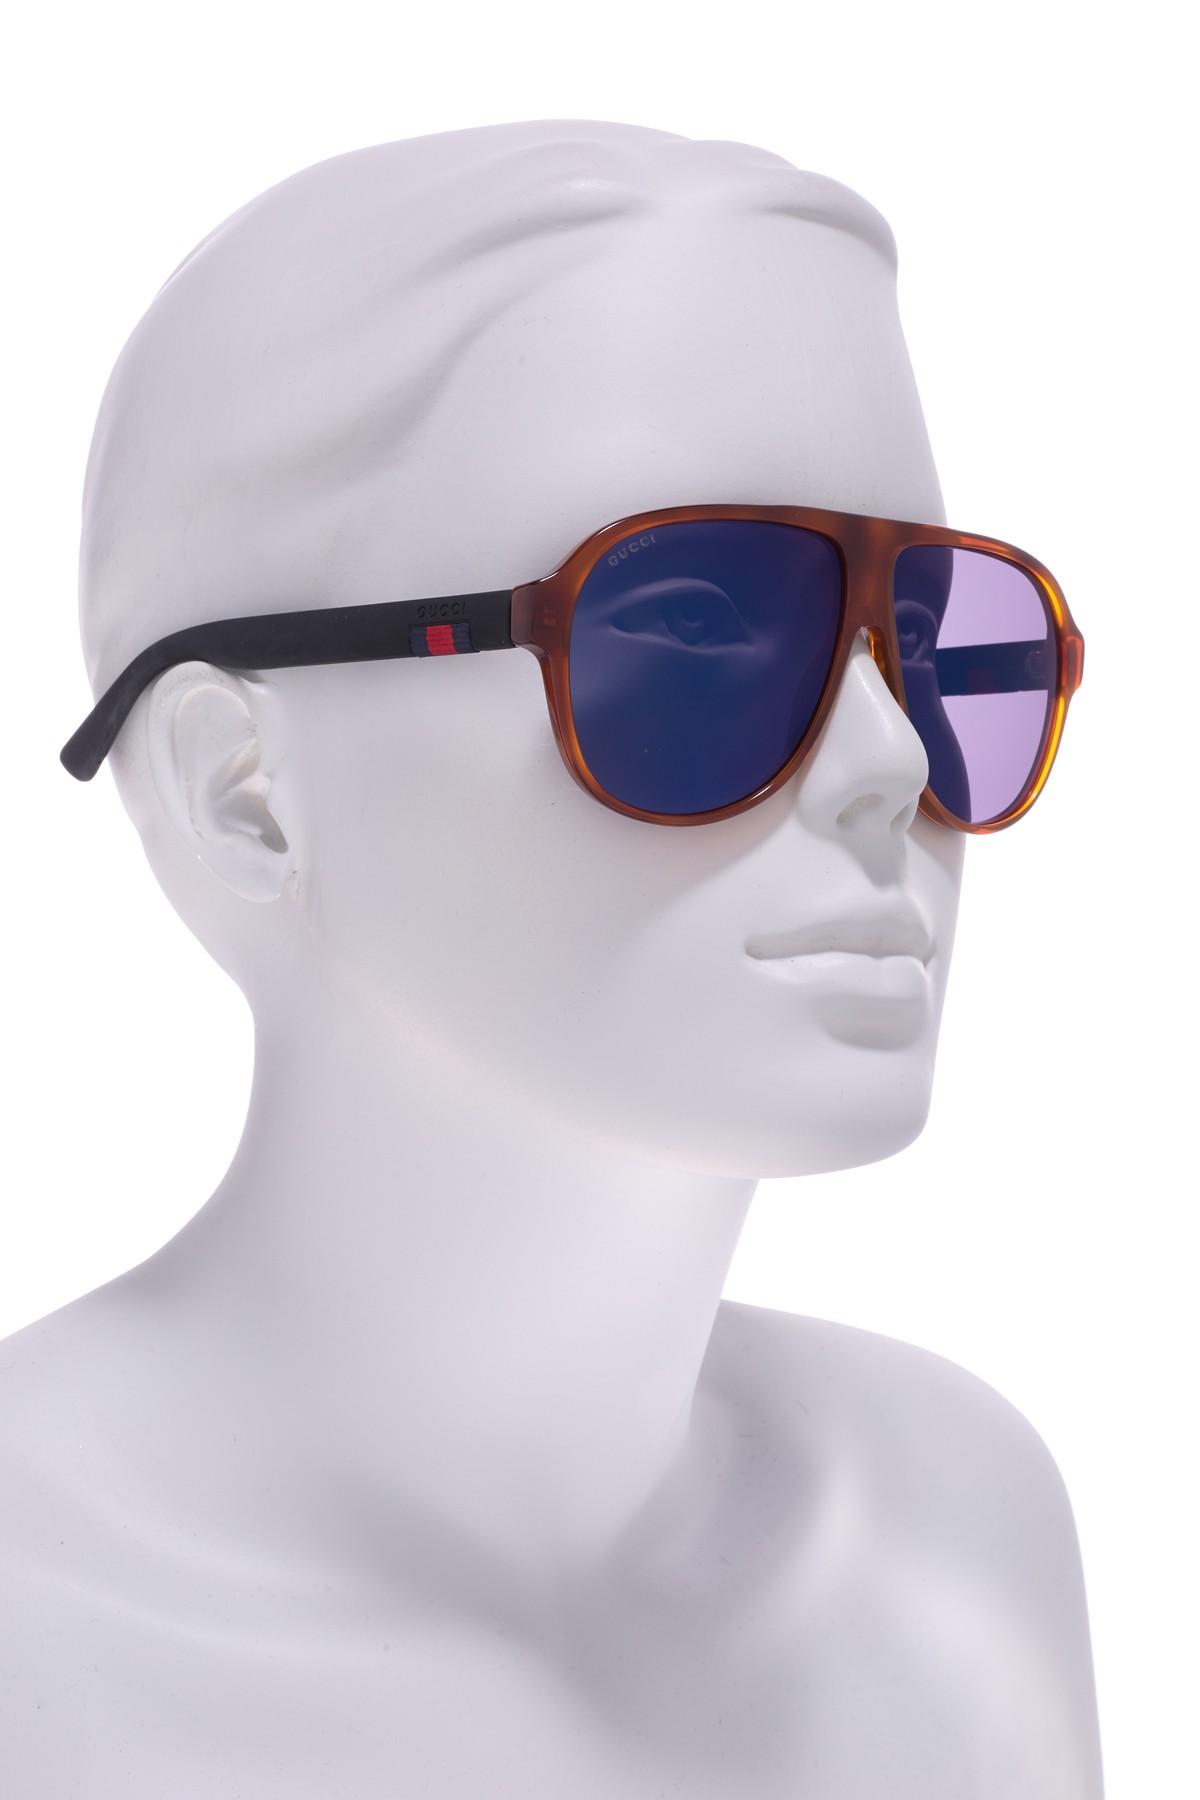 Gucci 59mm Shield Sunglasses in Blue for Men - Lyst